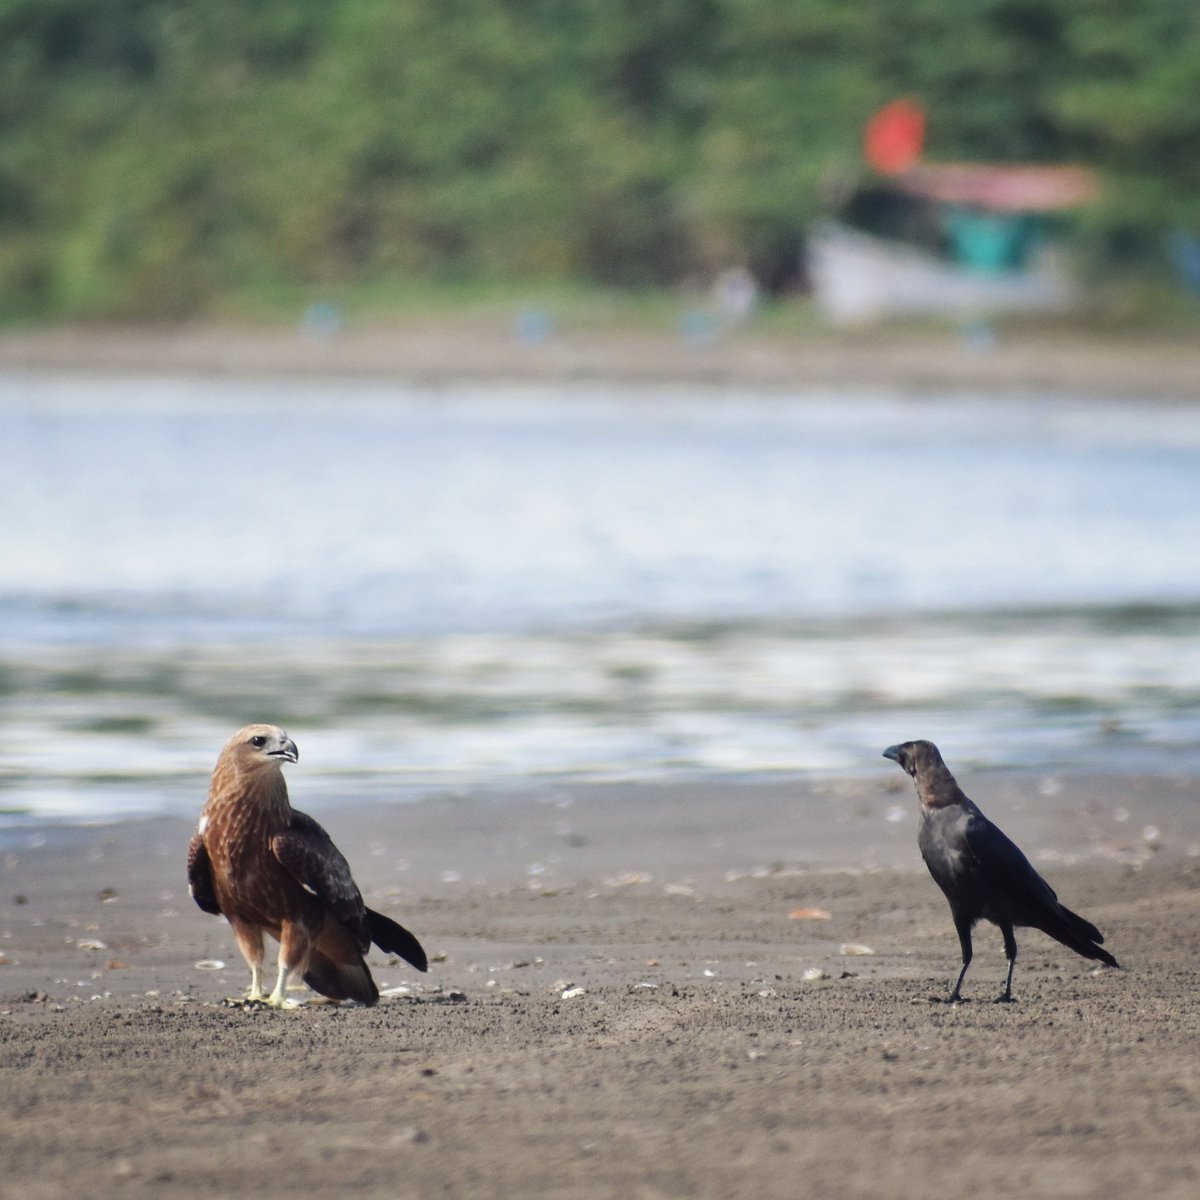 𝑷𝒆𝒂𝒄𝒆, 𝒍𝒐𝒗𝒆 𝒂𝒏𝒅 𝒔𝒂𝒏𝒅𝒚 𝒇𝒆𝒆𝒕 💚

#beachday #IndiAves #Luv4birds #birdwatching #goa